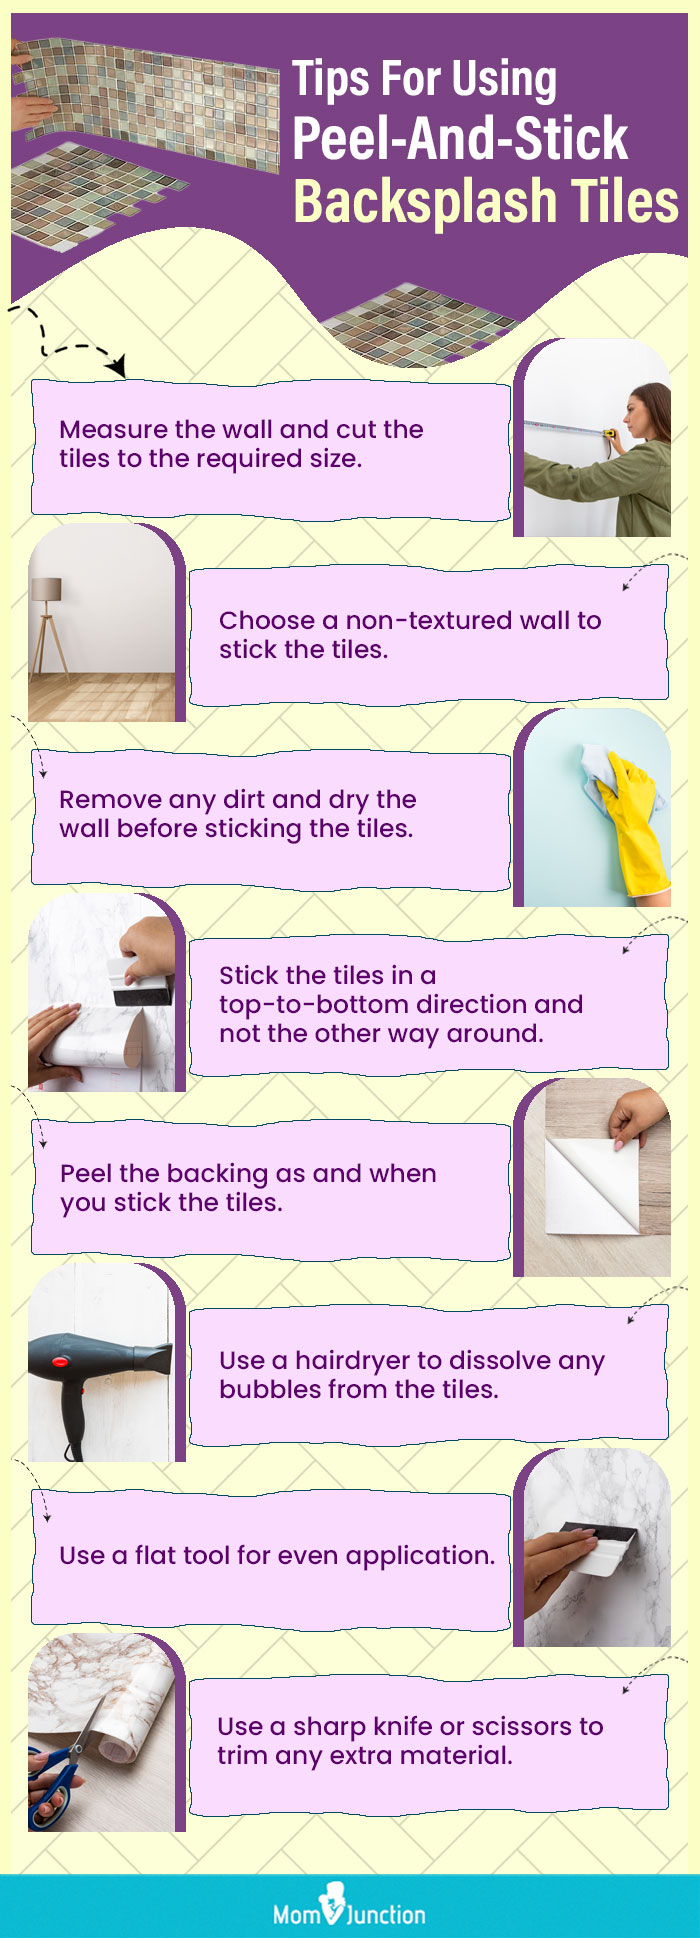 Tips For Using Peel And Stick Backsplash Tiles(infographic)